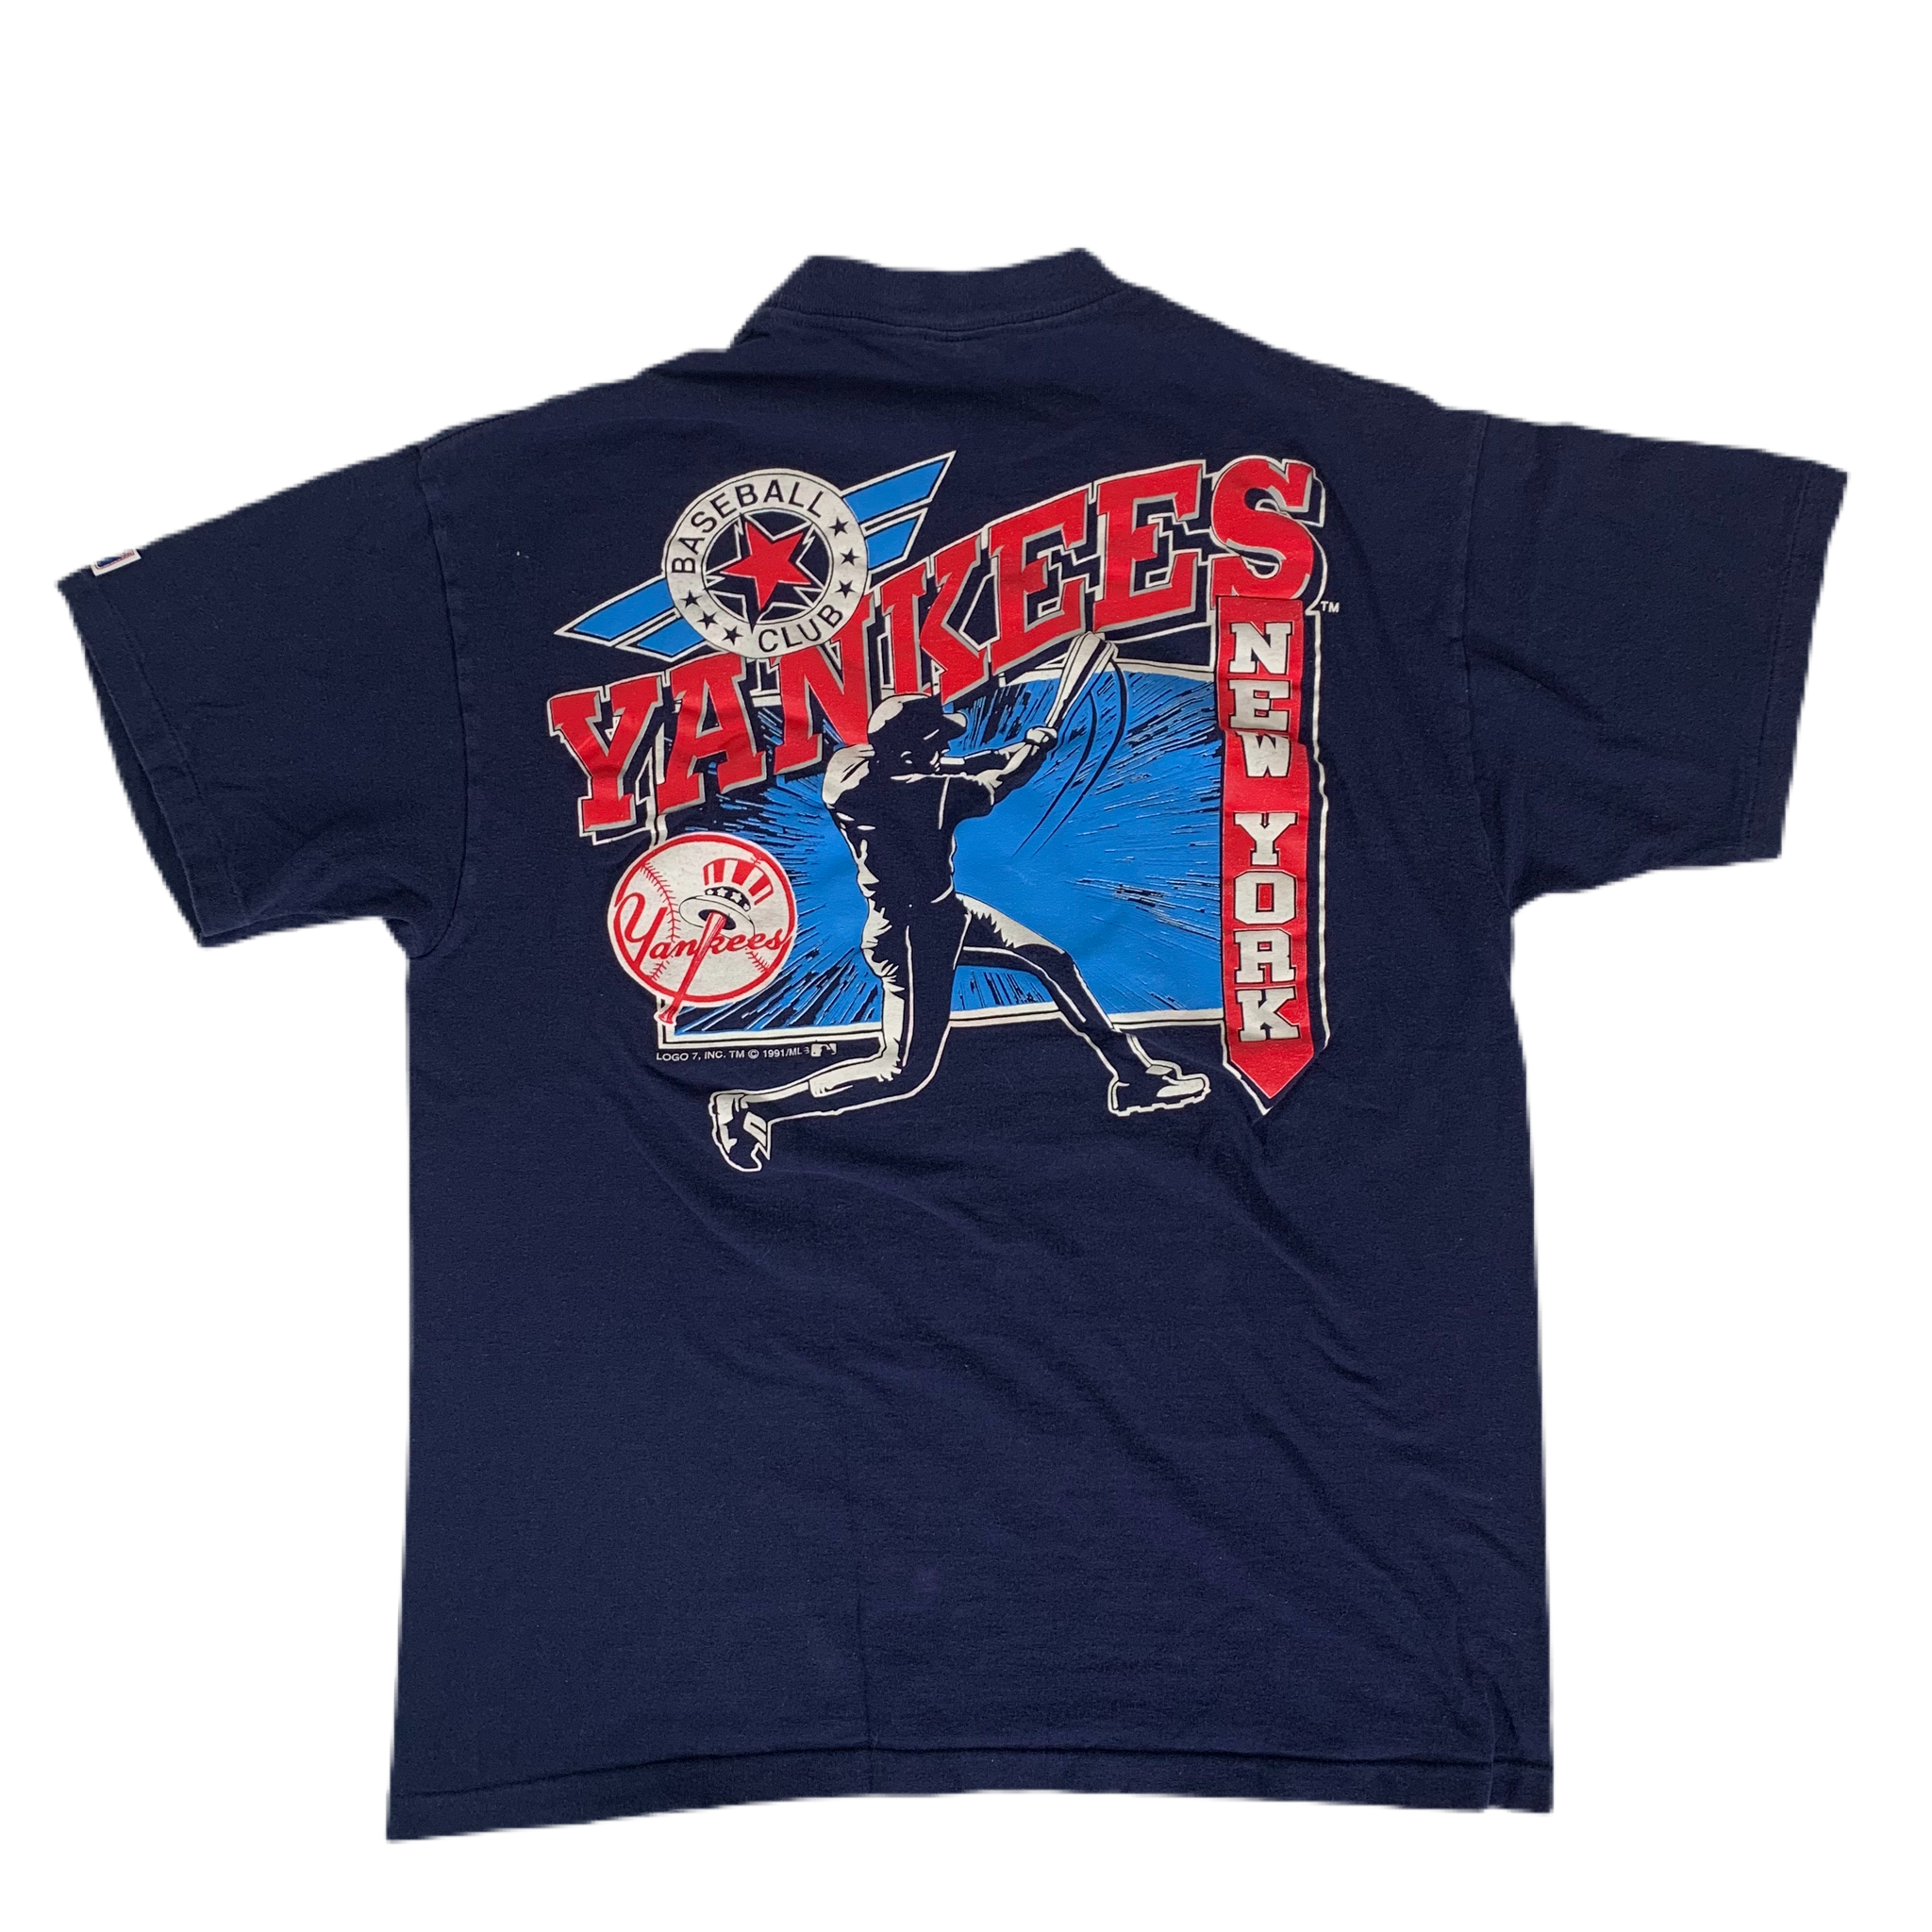 Vintage 90s T-shirt New York YANKEES Ny Mlb Baseball World